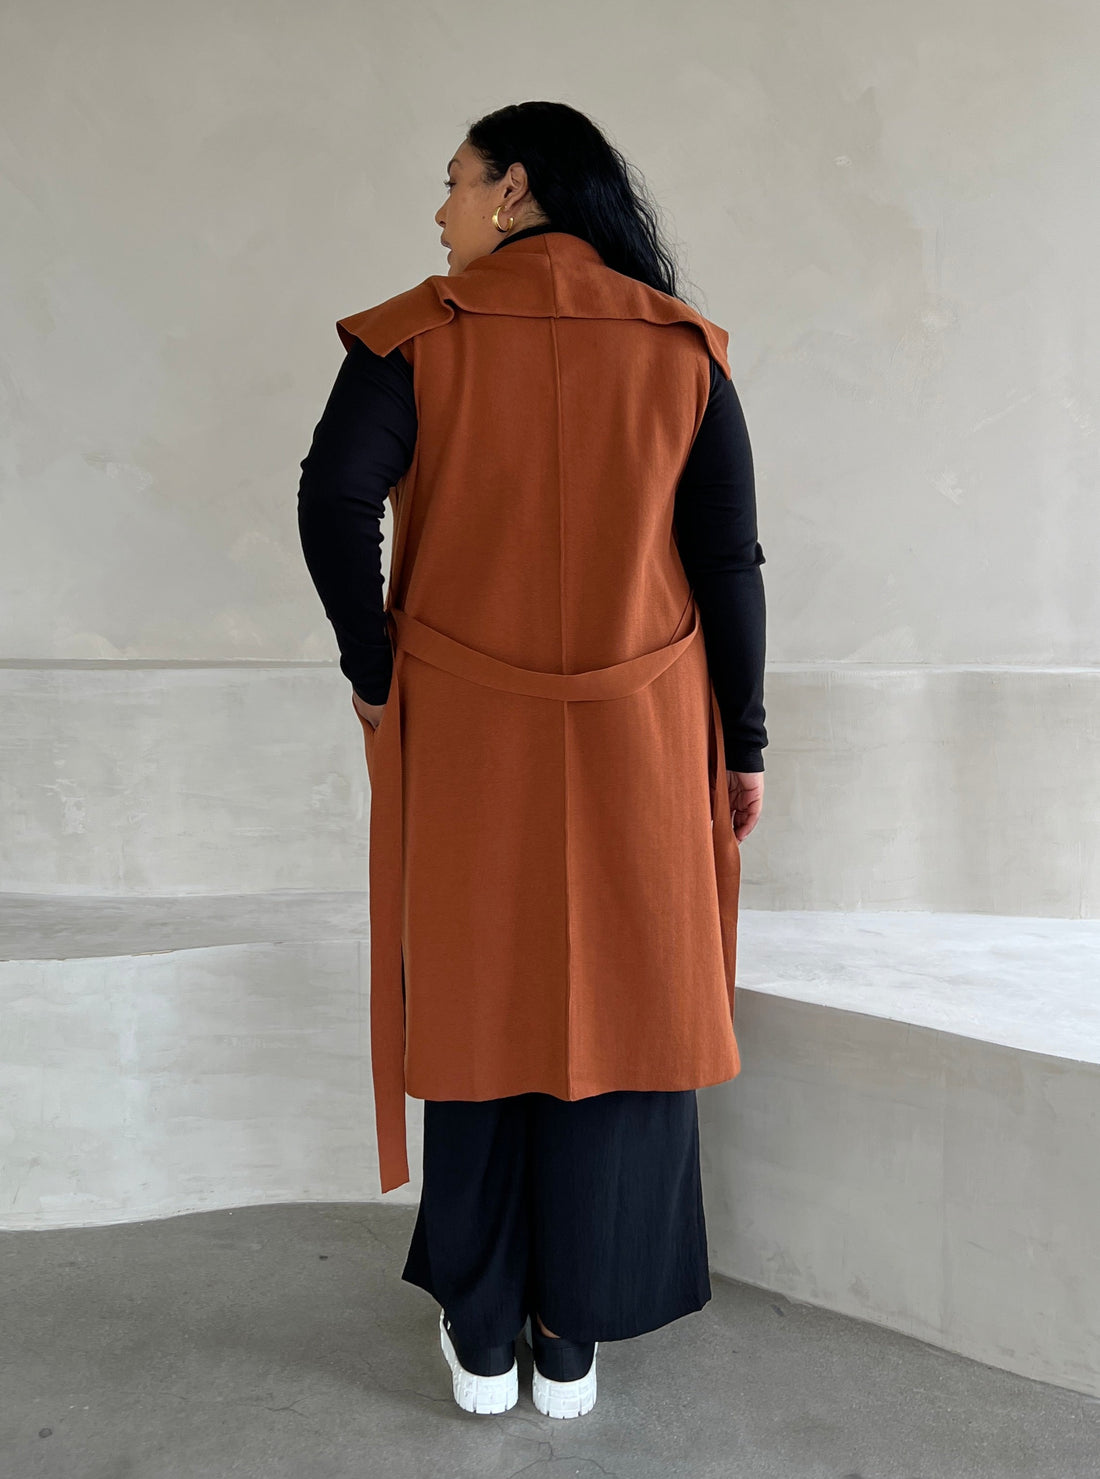 Plus Size Long Sleeveless Coat Plus Size Outerwear -2020AVE